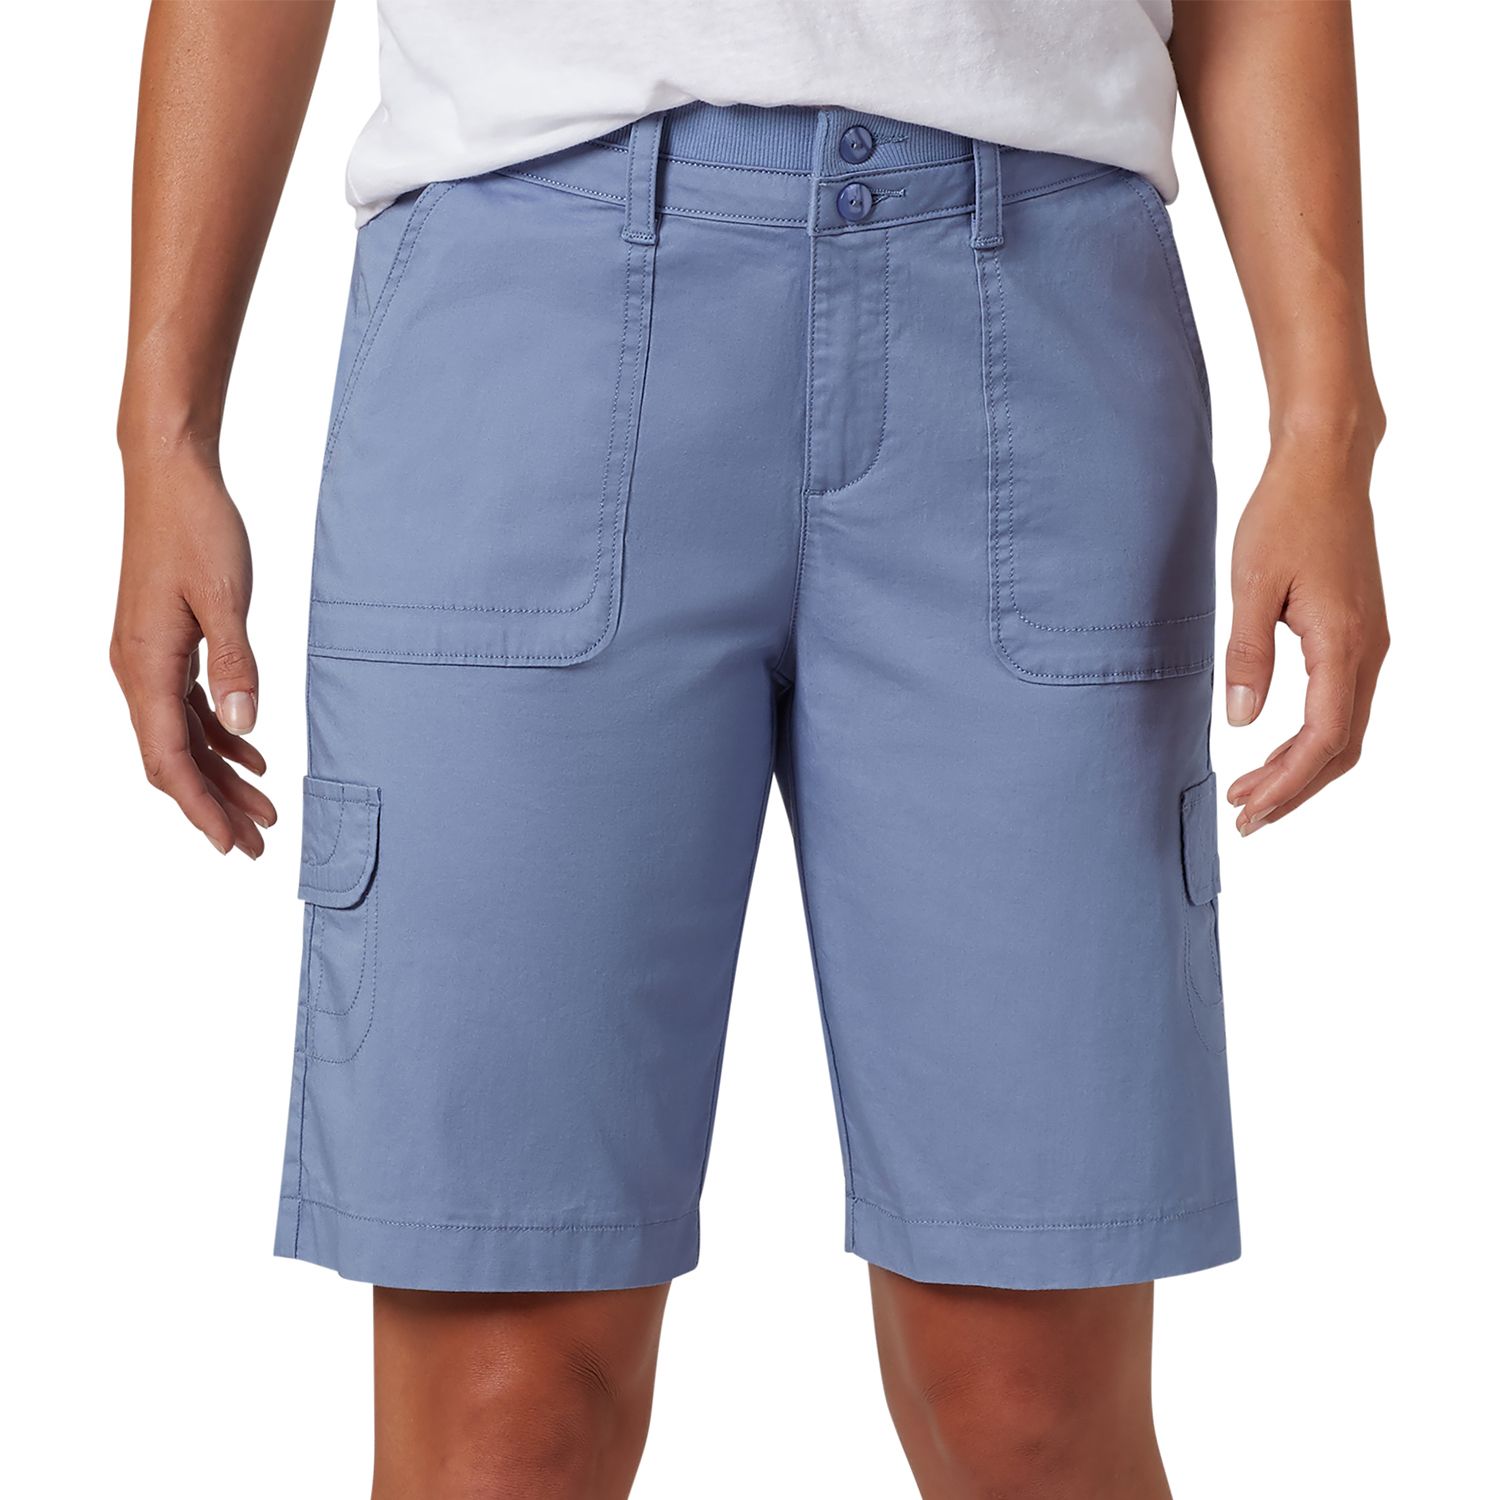 lee comfort stretch waistband shorts womens